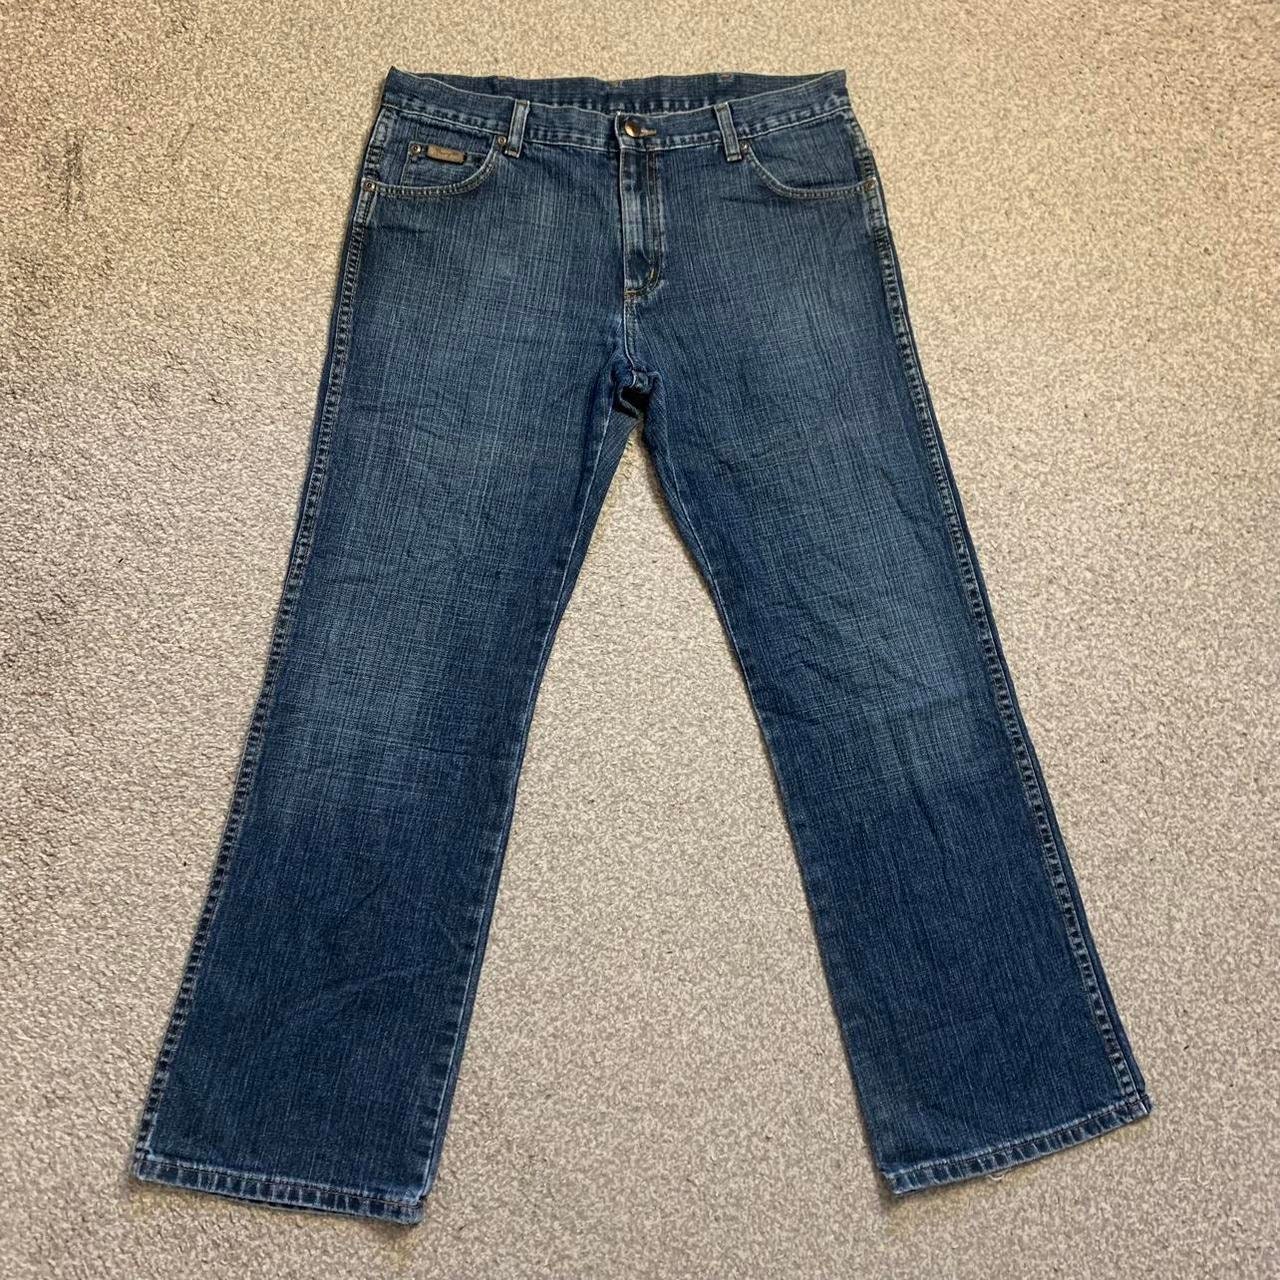 Wrangler Jeans Regular Fit Straight Leg Zip Fly Vintage Dark Wash 33x30  Mens -  Australia